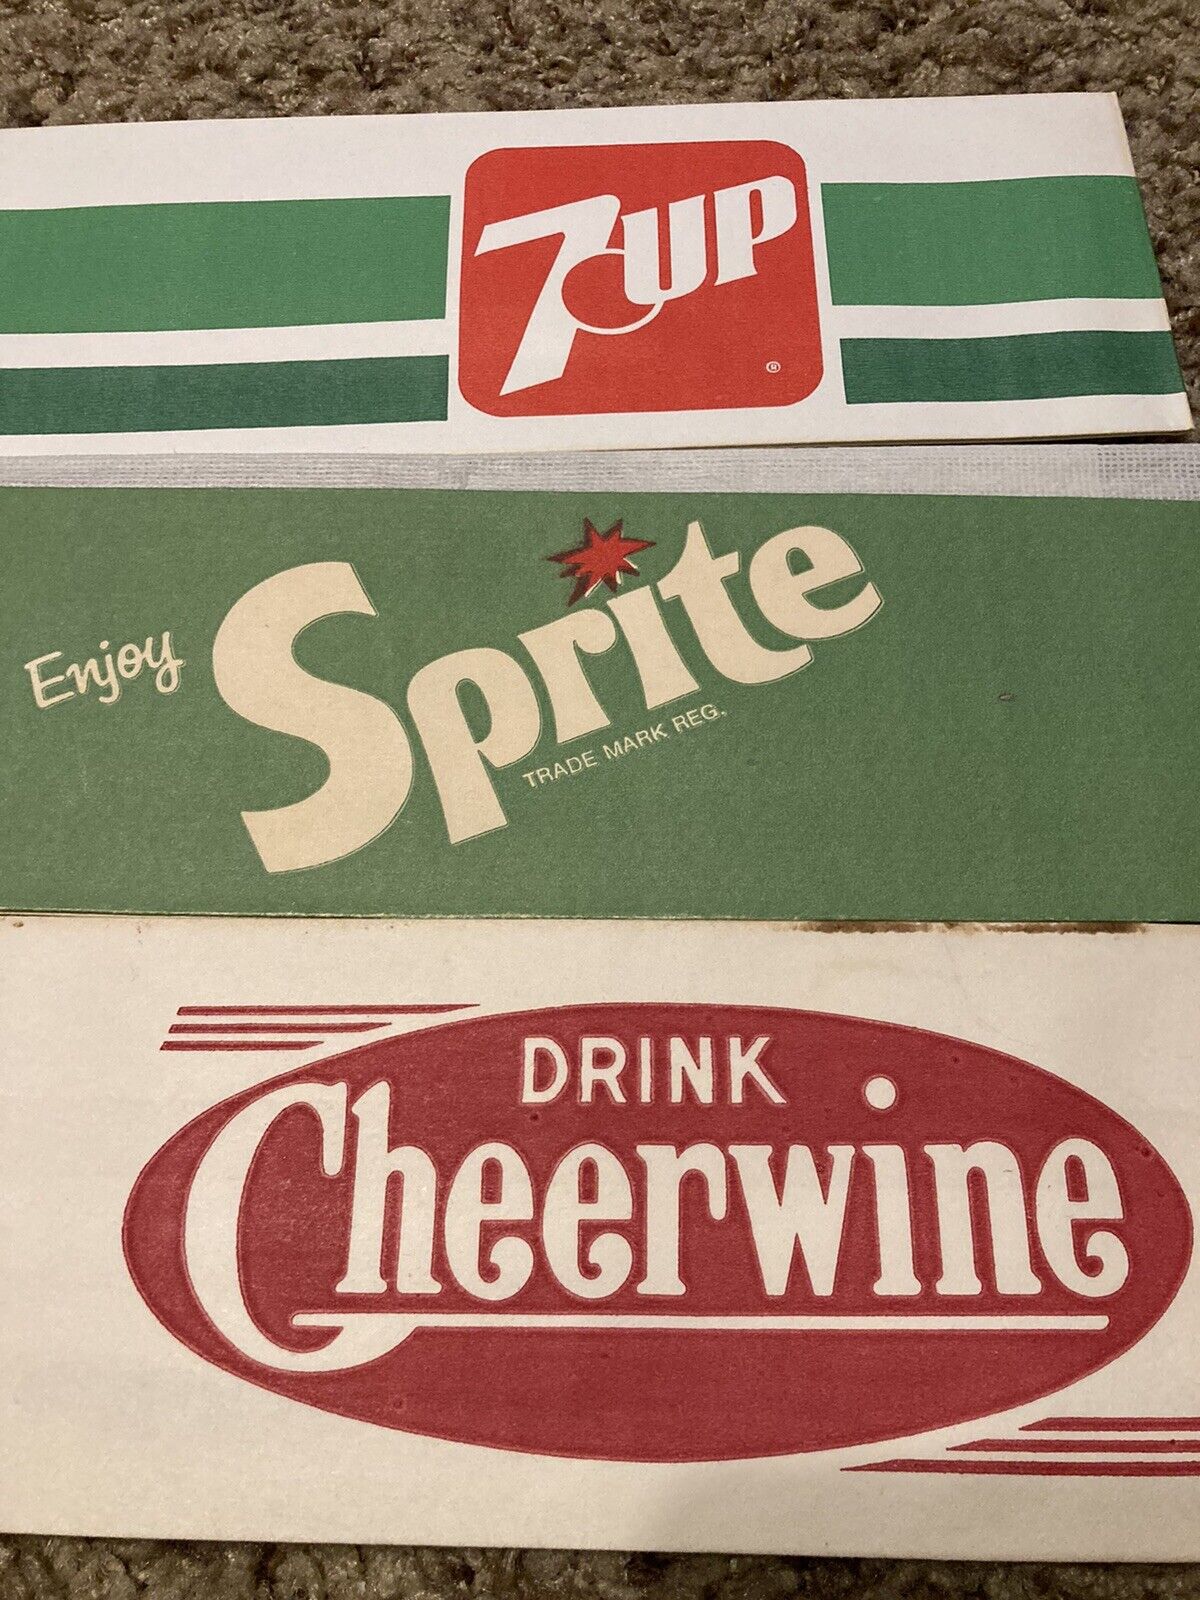 3 Soda Jerk Hats Drink Cheerwine Sprite 7up Pop Restaurant Drive-in